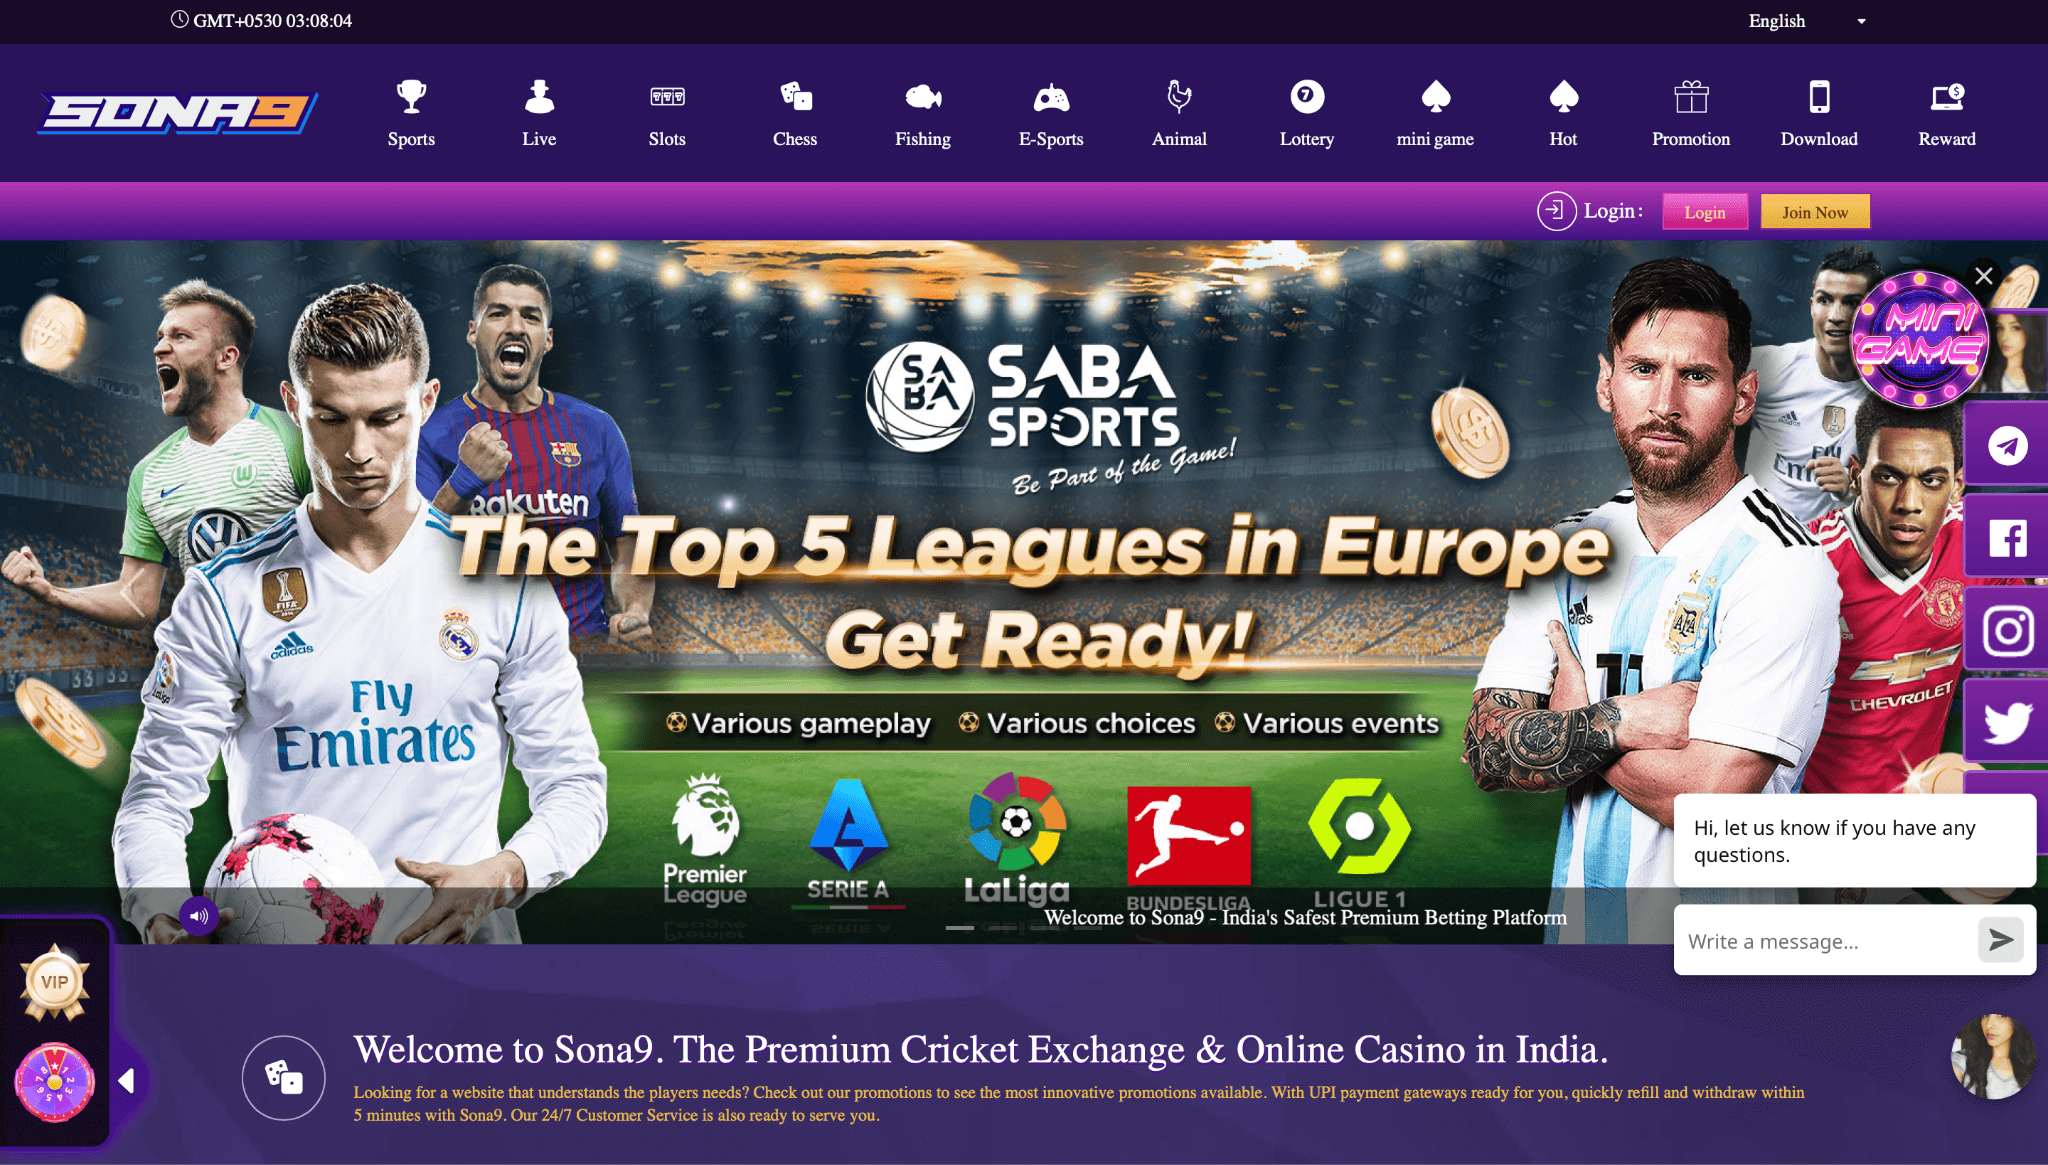 Sona9 Betting And Casino Website - Download App, Login, Bonuses